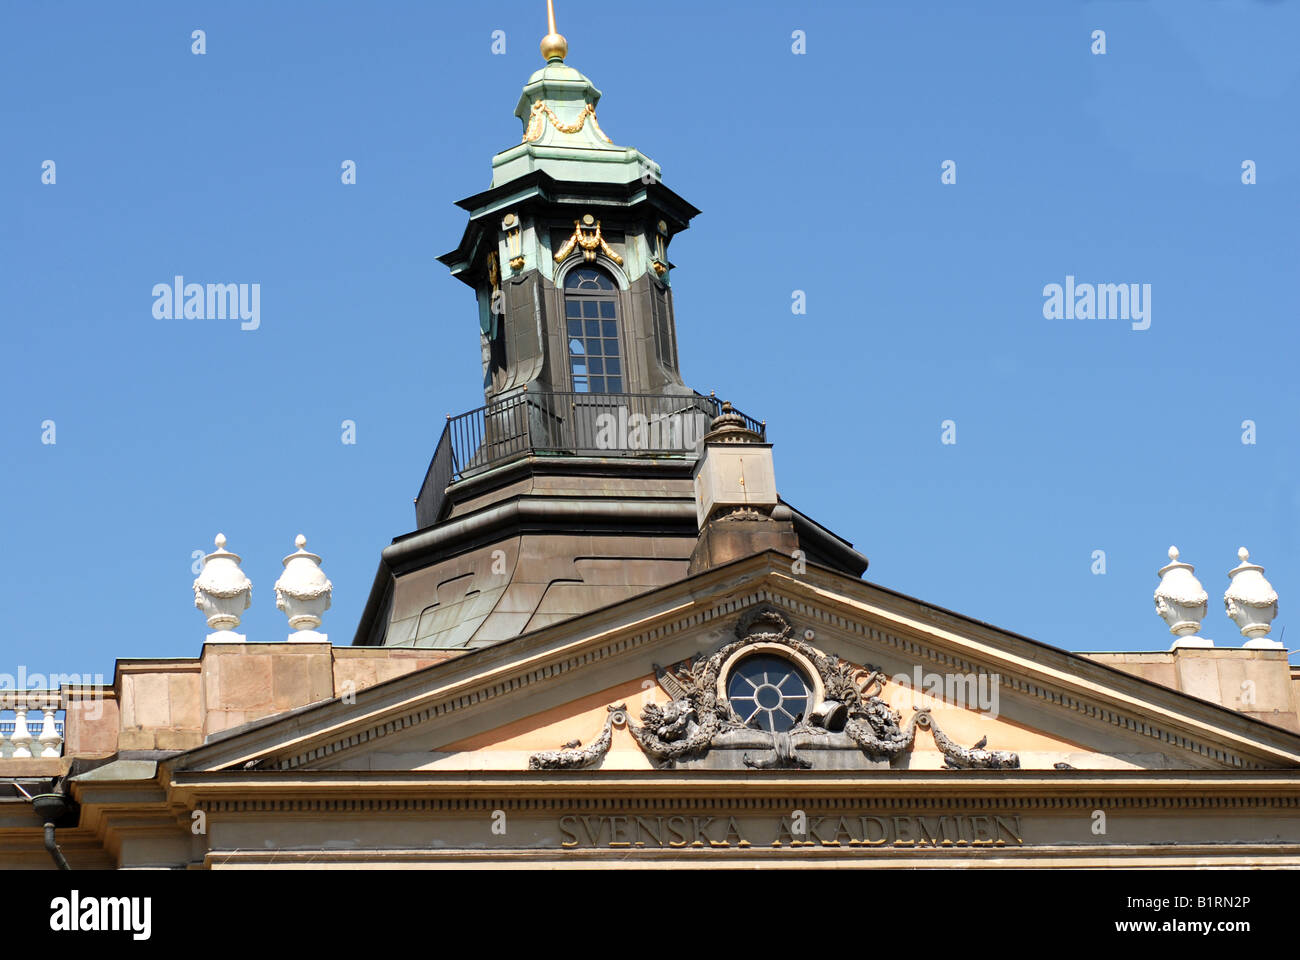 Tower on the roof of the Swedish Academy - Svenska Akademien Stock Photo